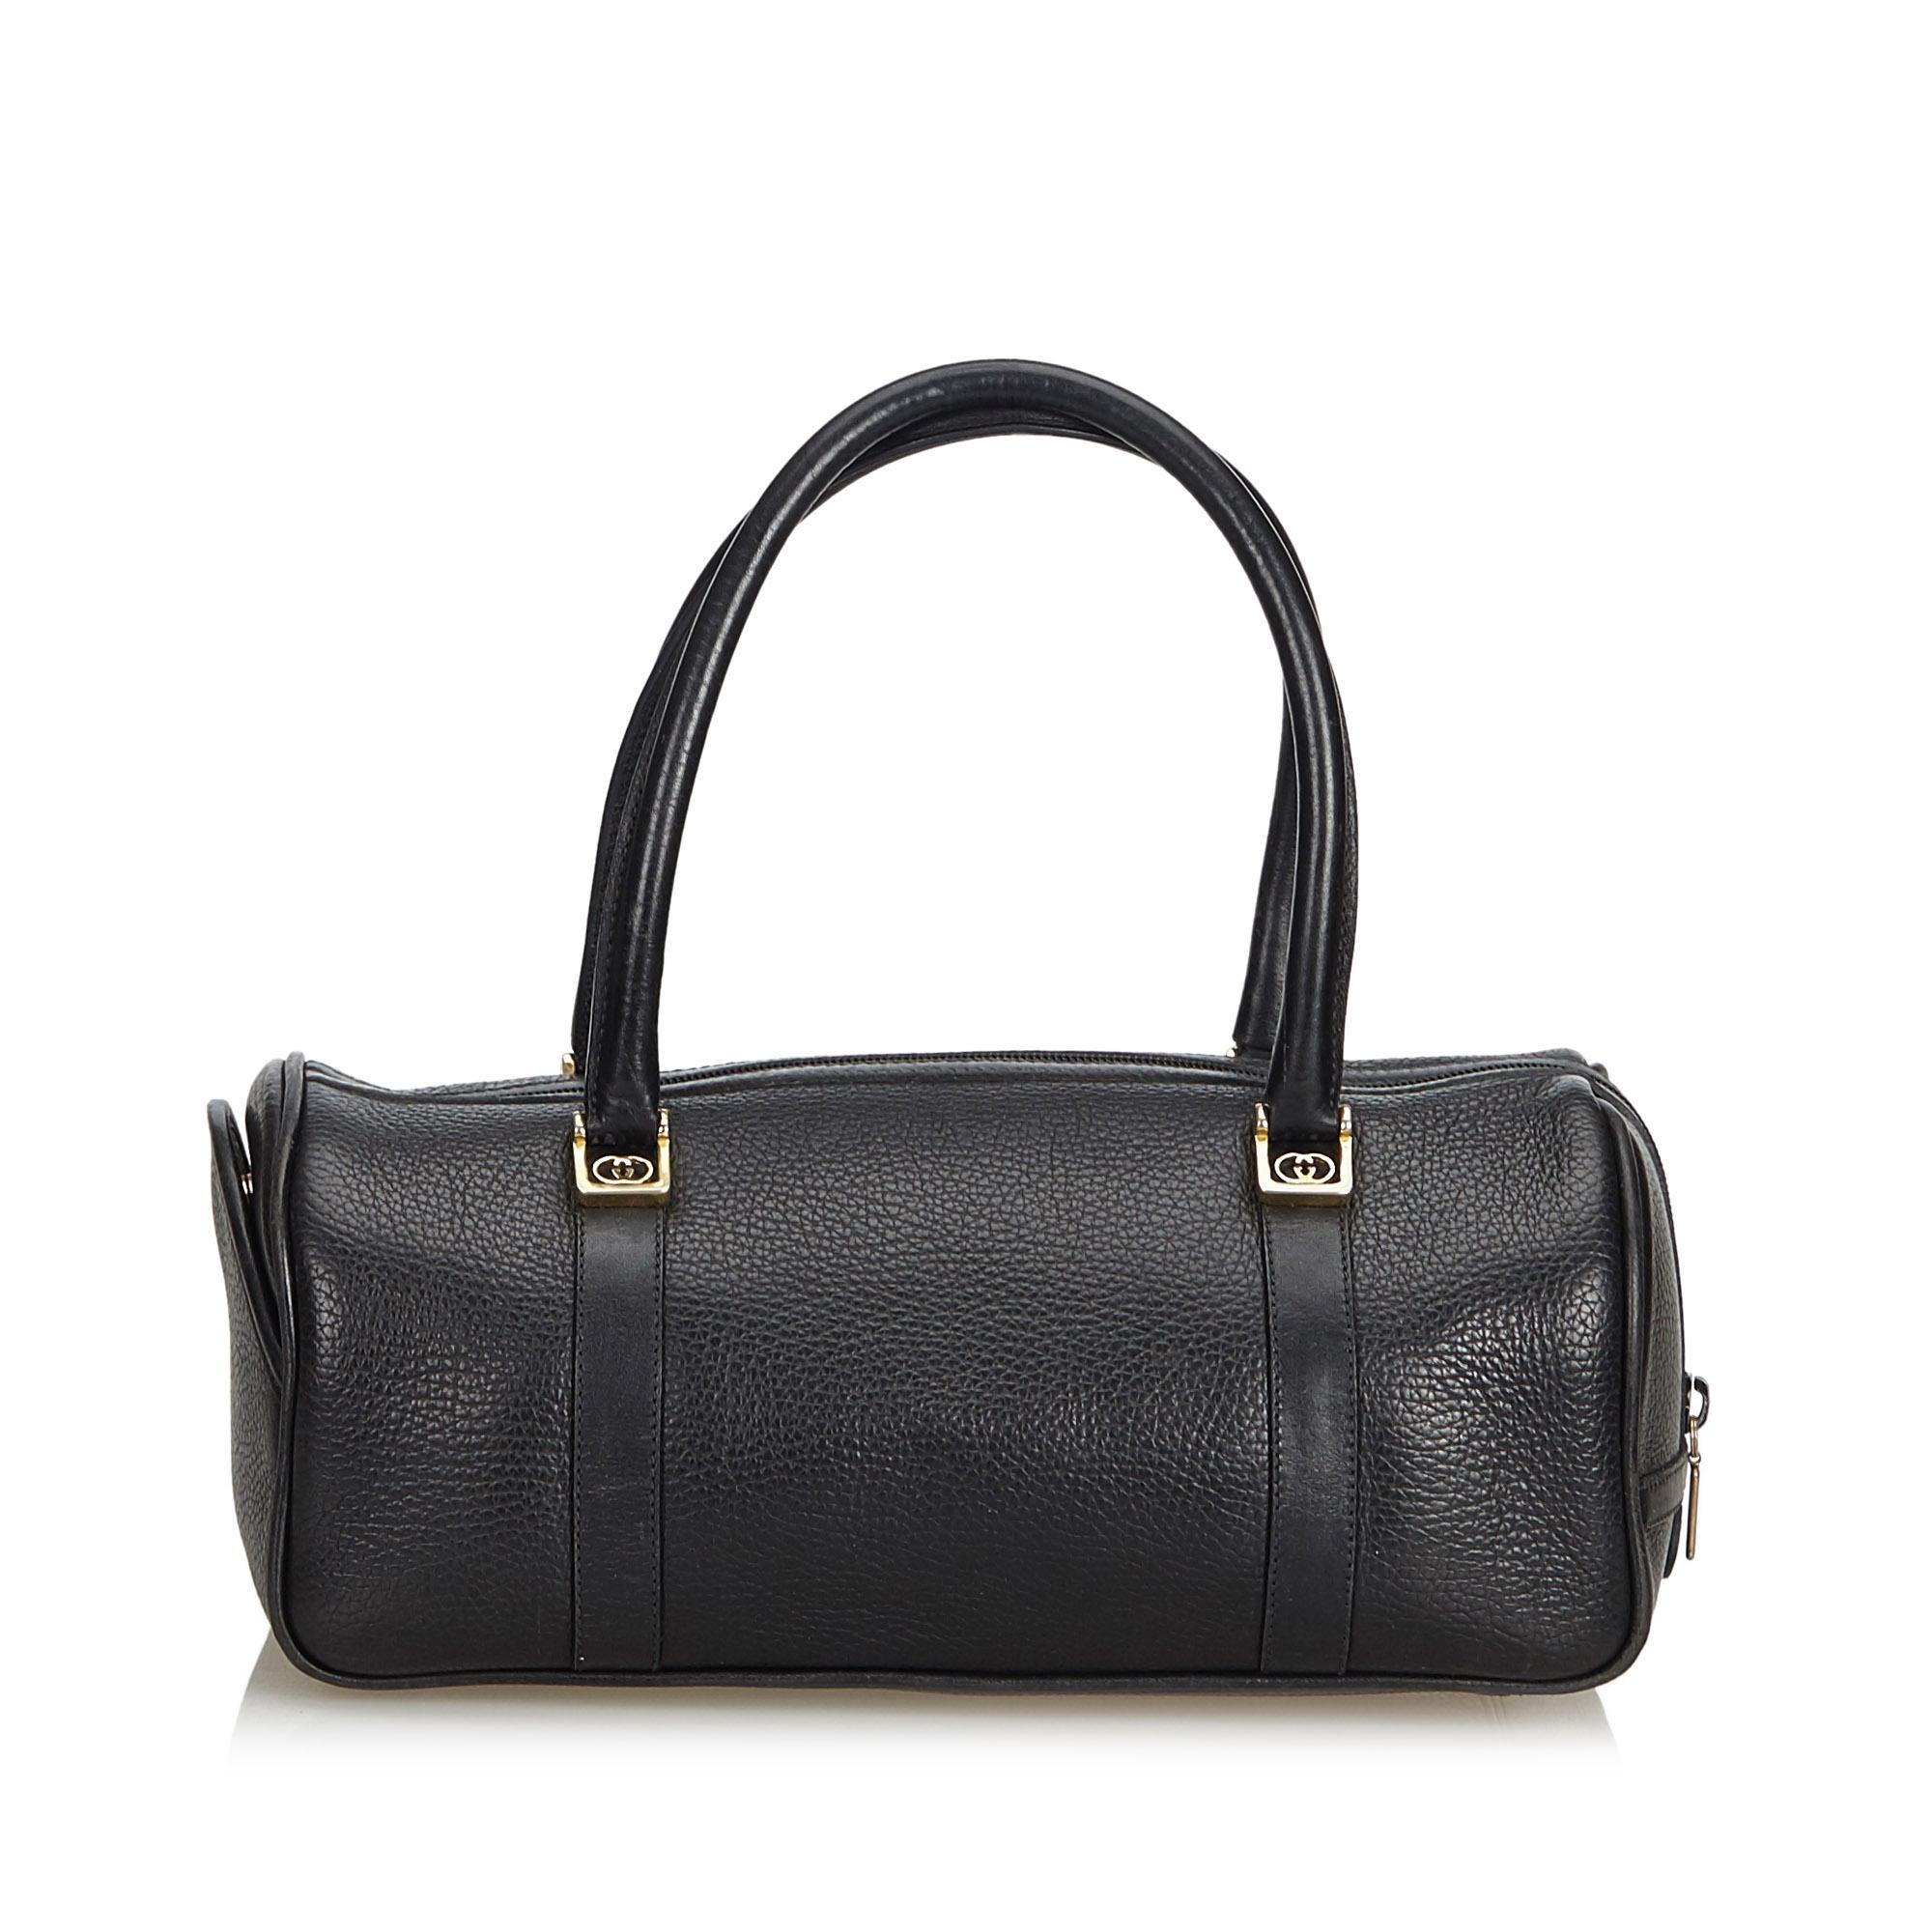 Gucci Black Leather Handbag In Good Condition For Sale In Orlando, FL